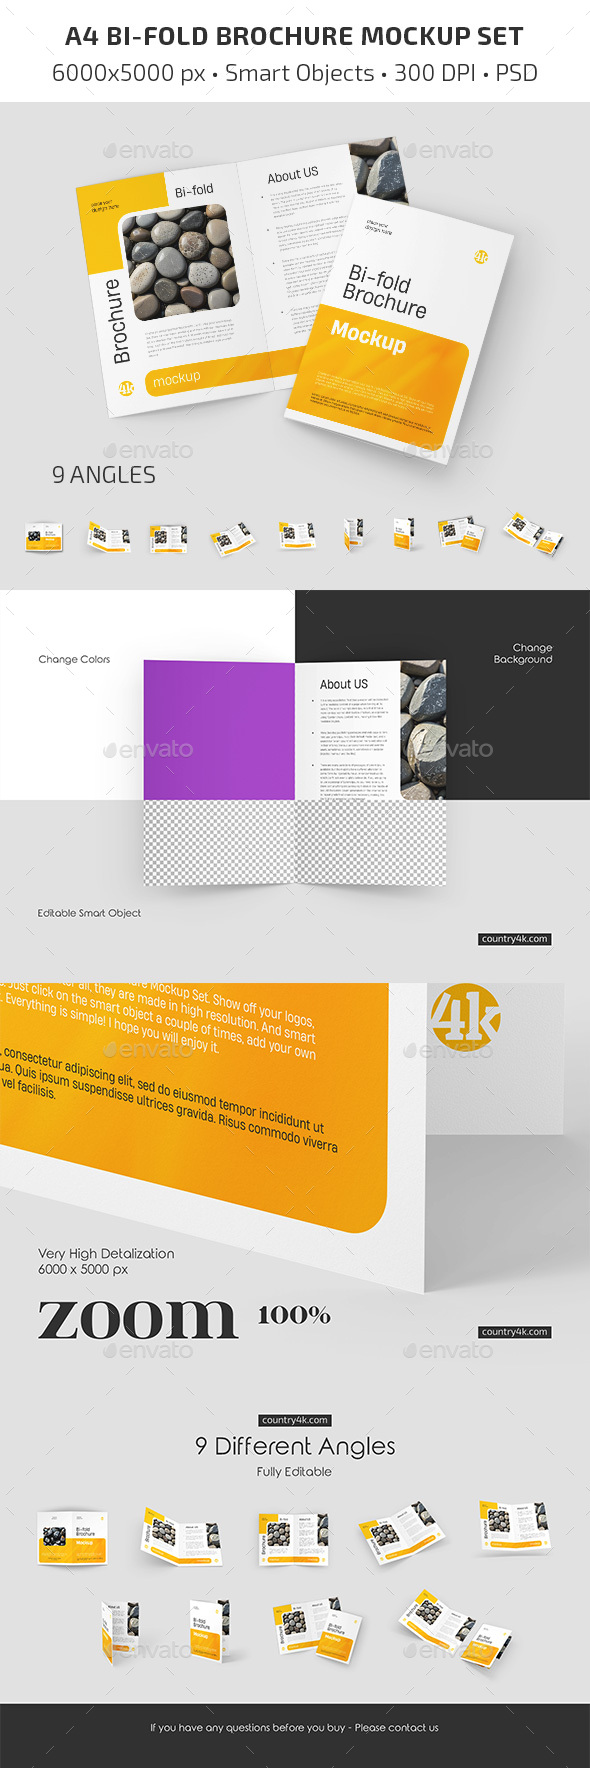 [DOWNLOAD]A4 Bi-Fold Brochure Mockup Set